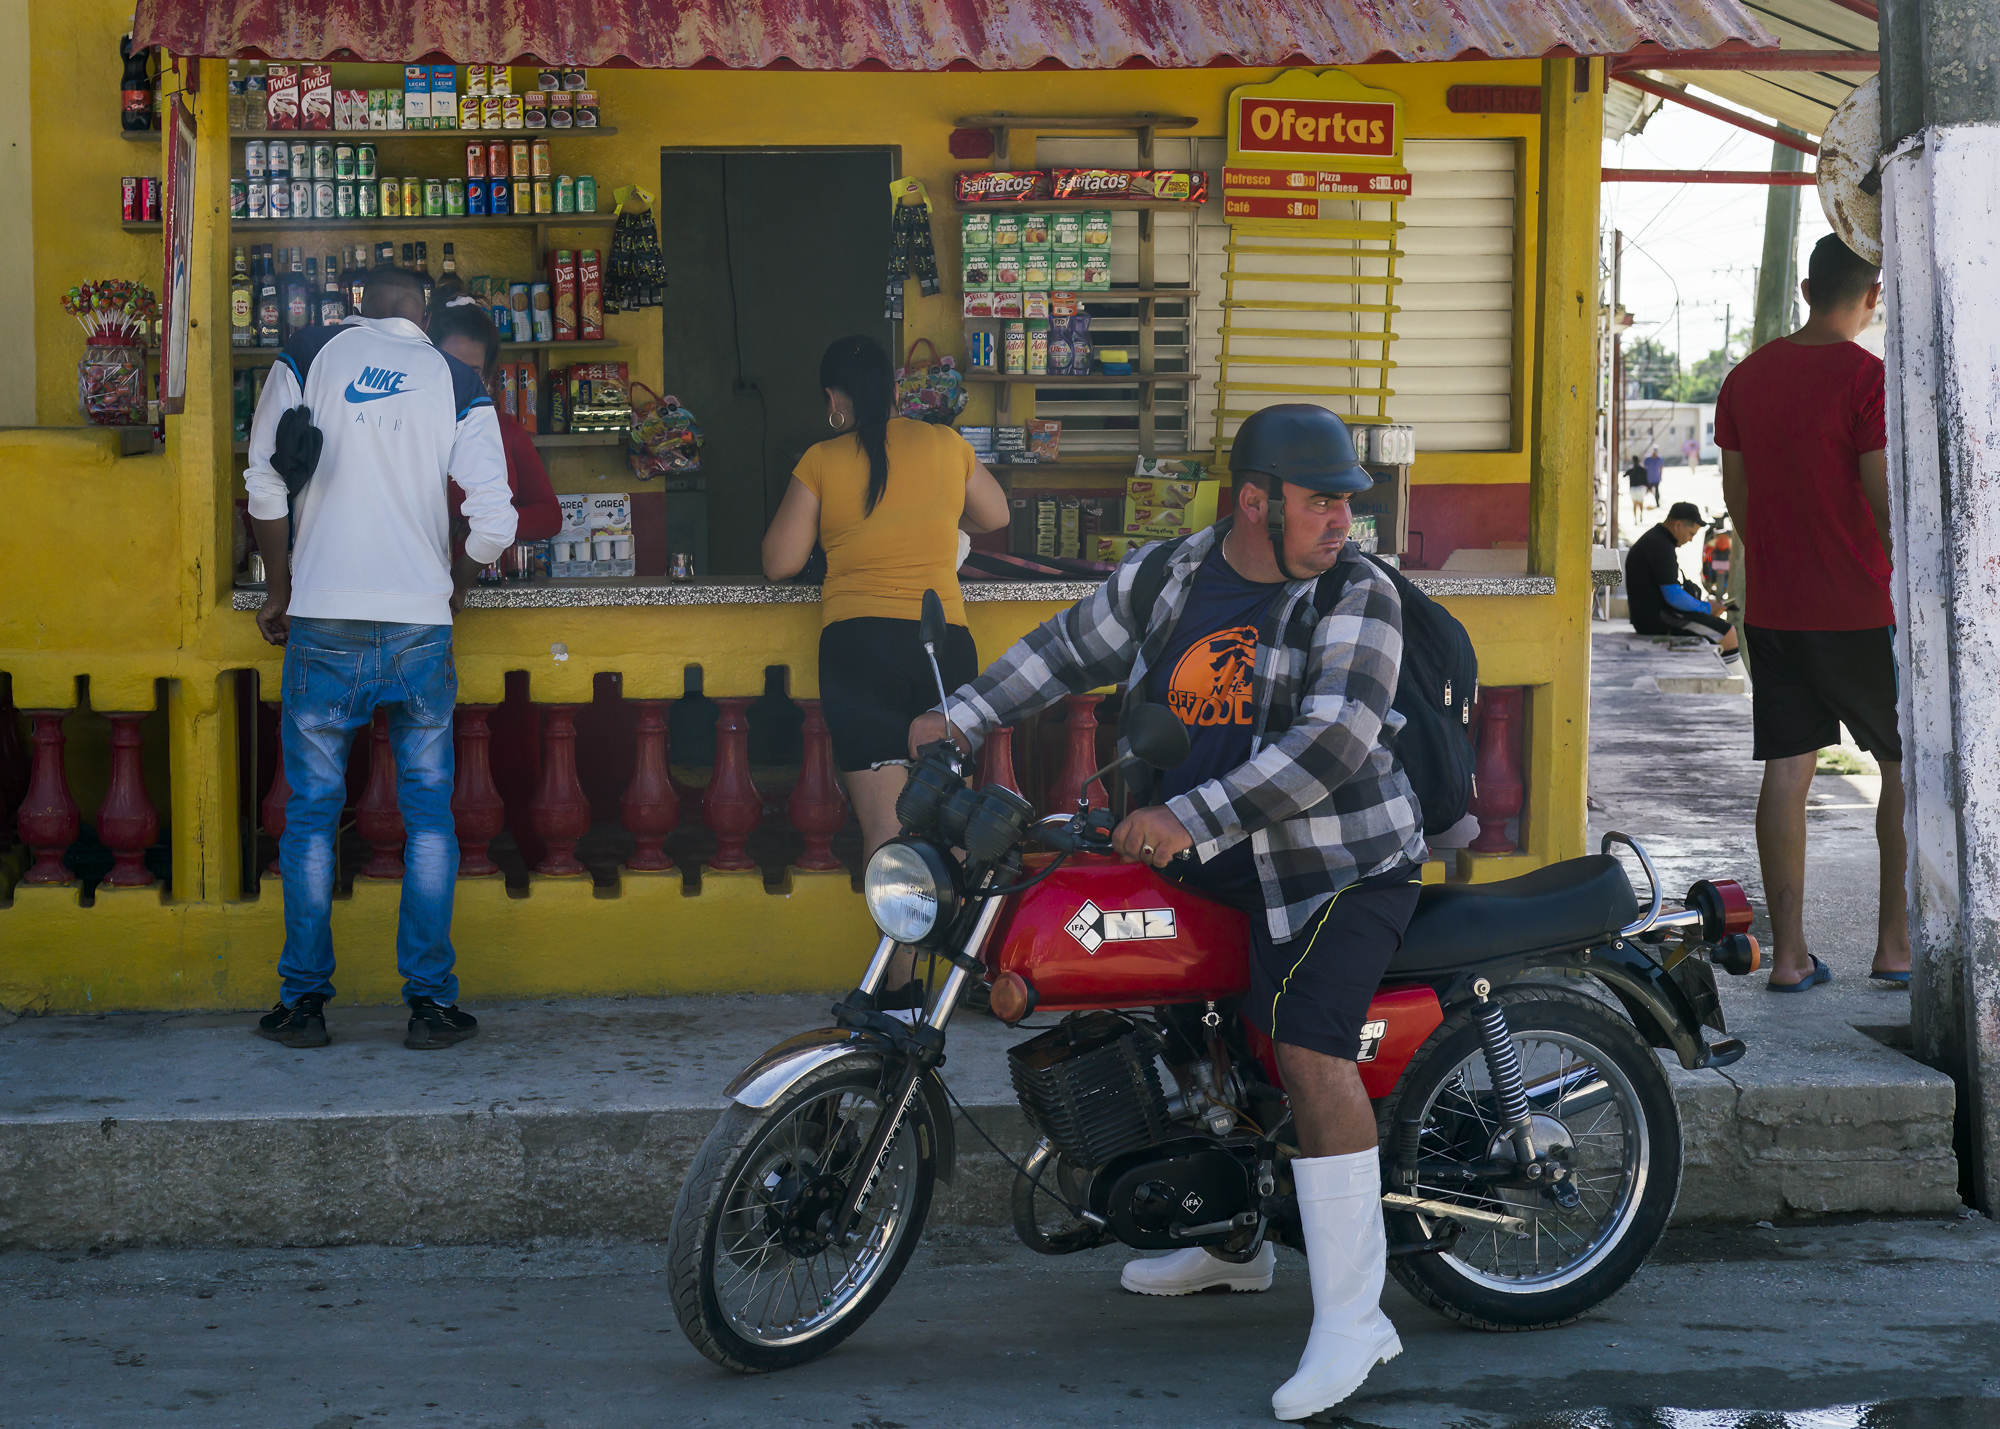 Cuba street photography